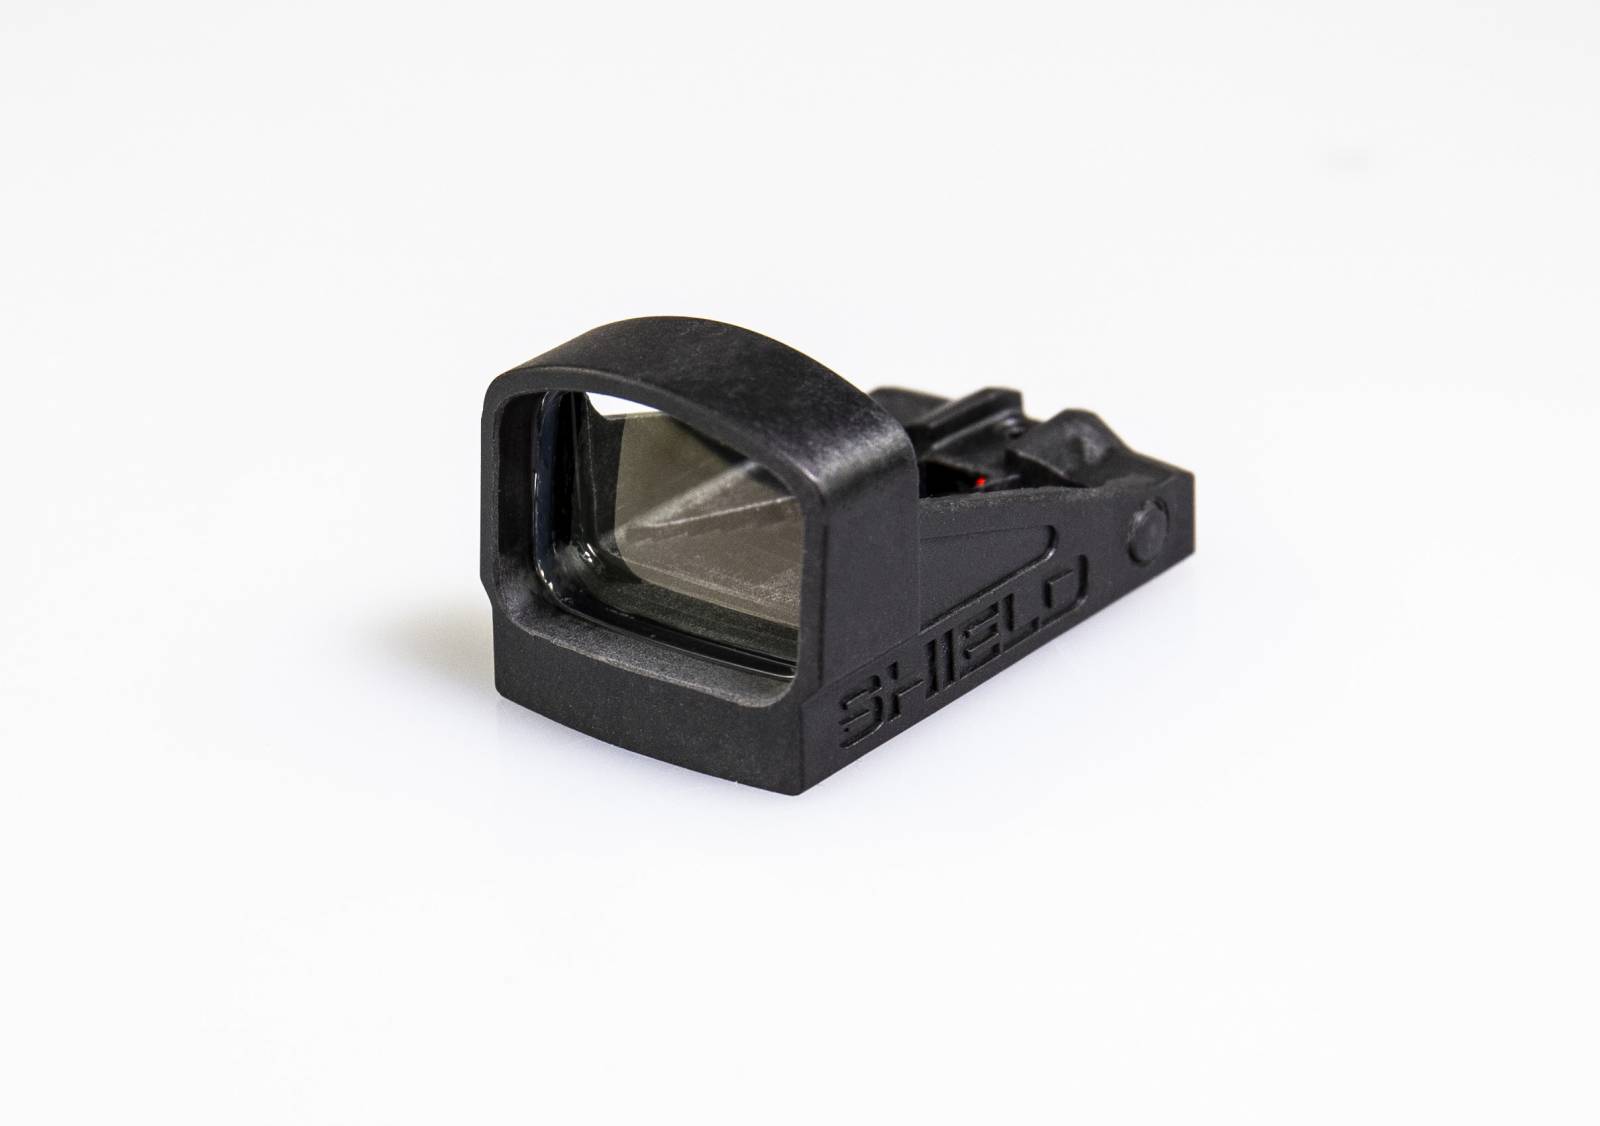 Shield Sights Mini Compact Smsc 4 Moa Polymer Lens Battlehawk Armory